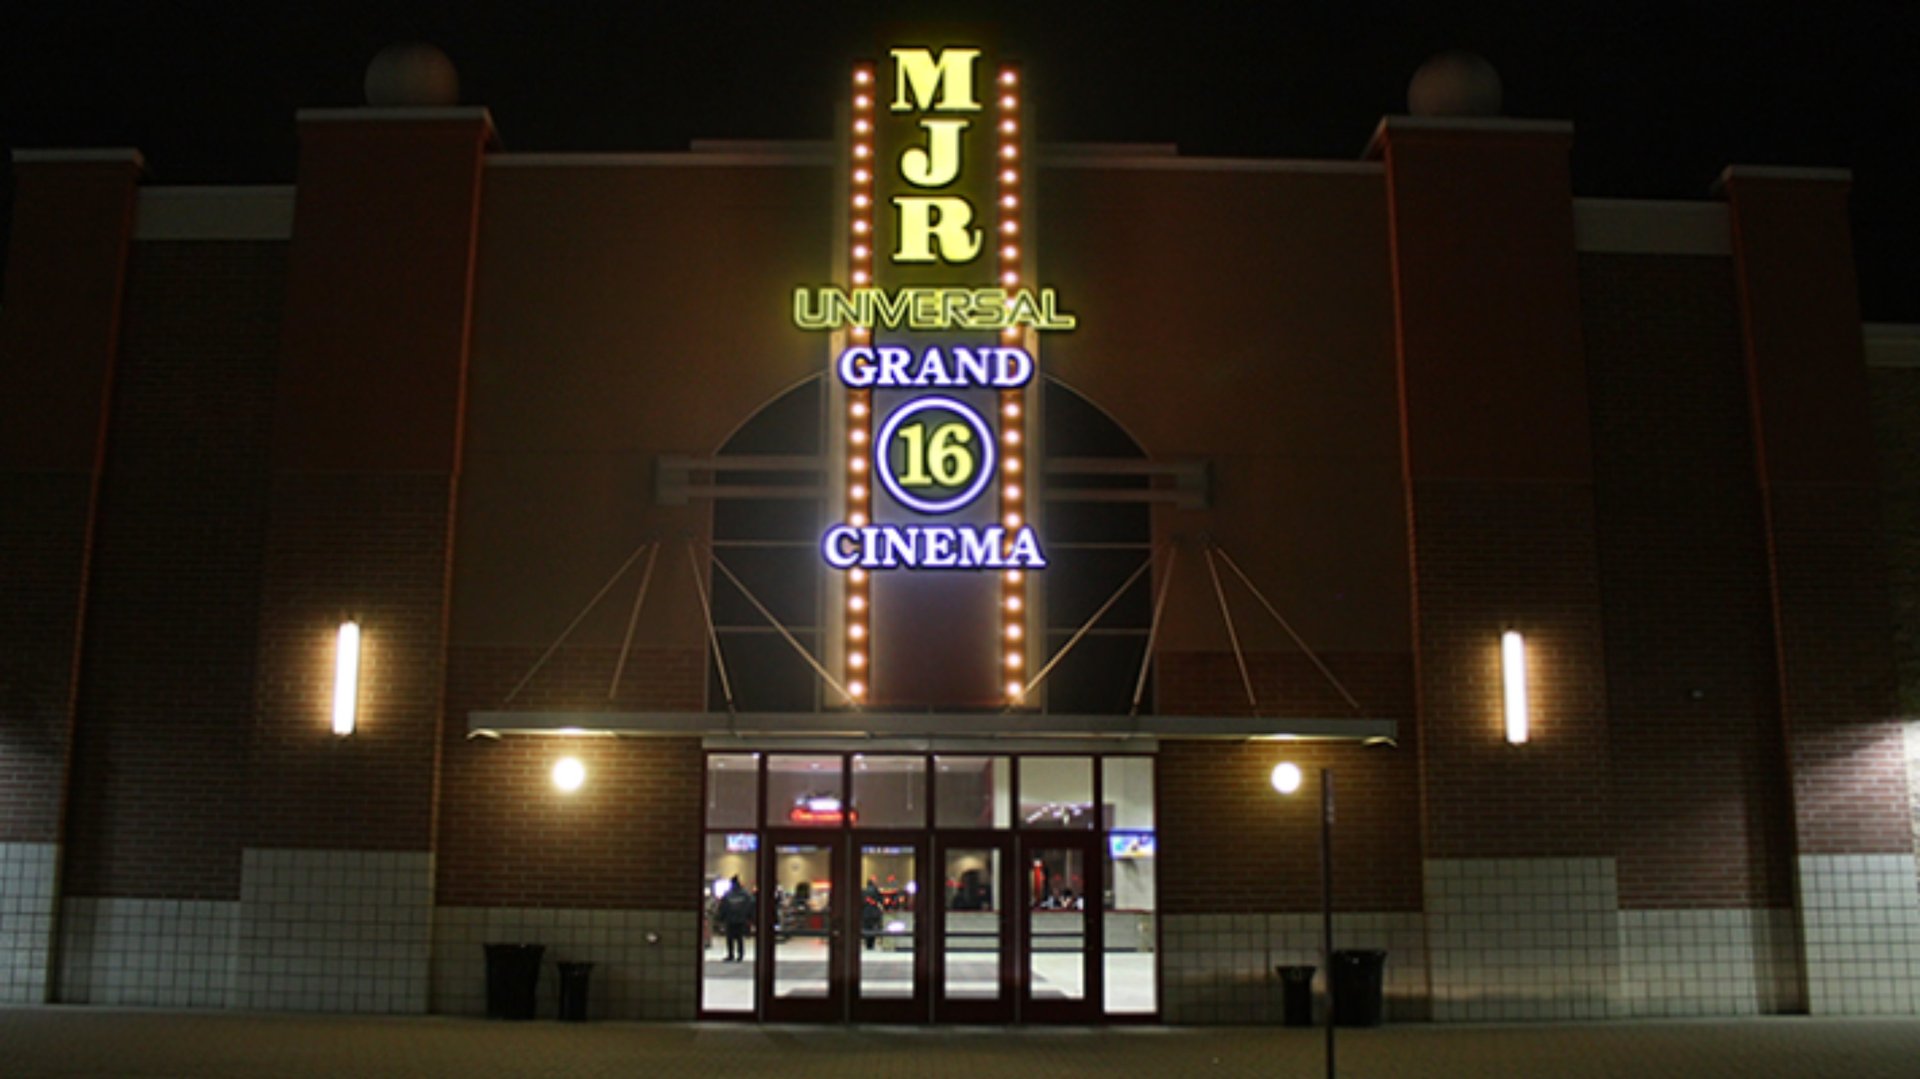 MJR Universal Grand Cinema 16 Movie Theater in Madison Heights, MI